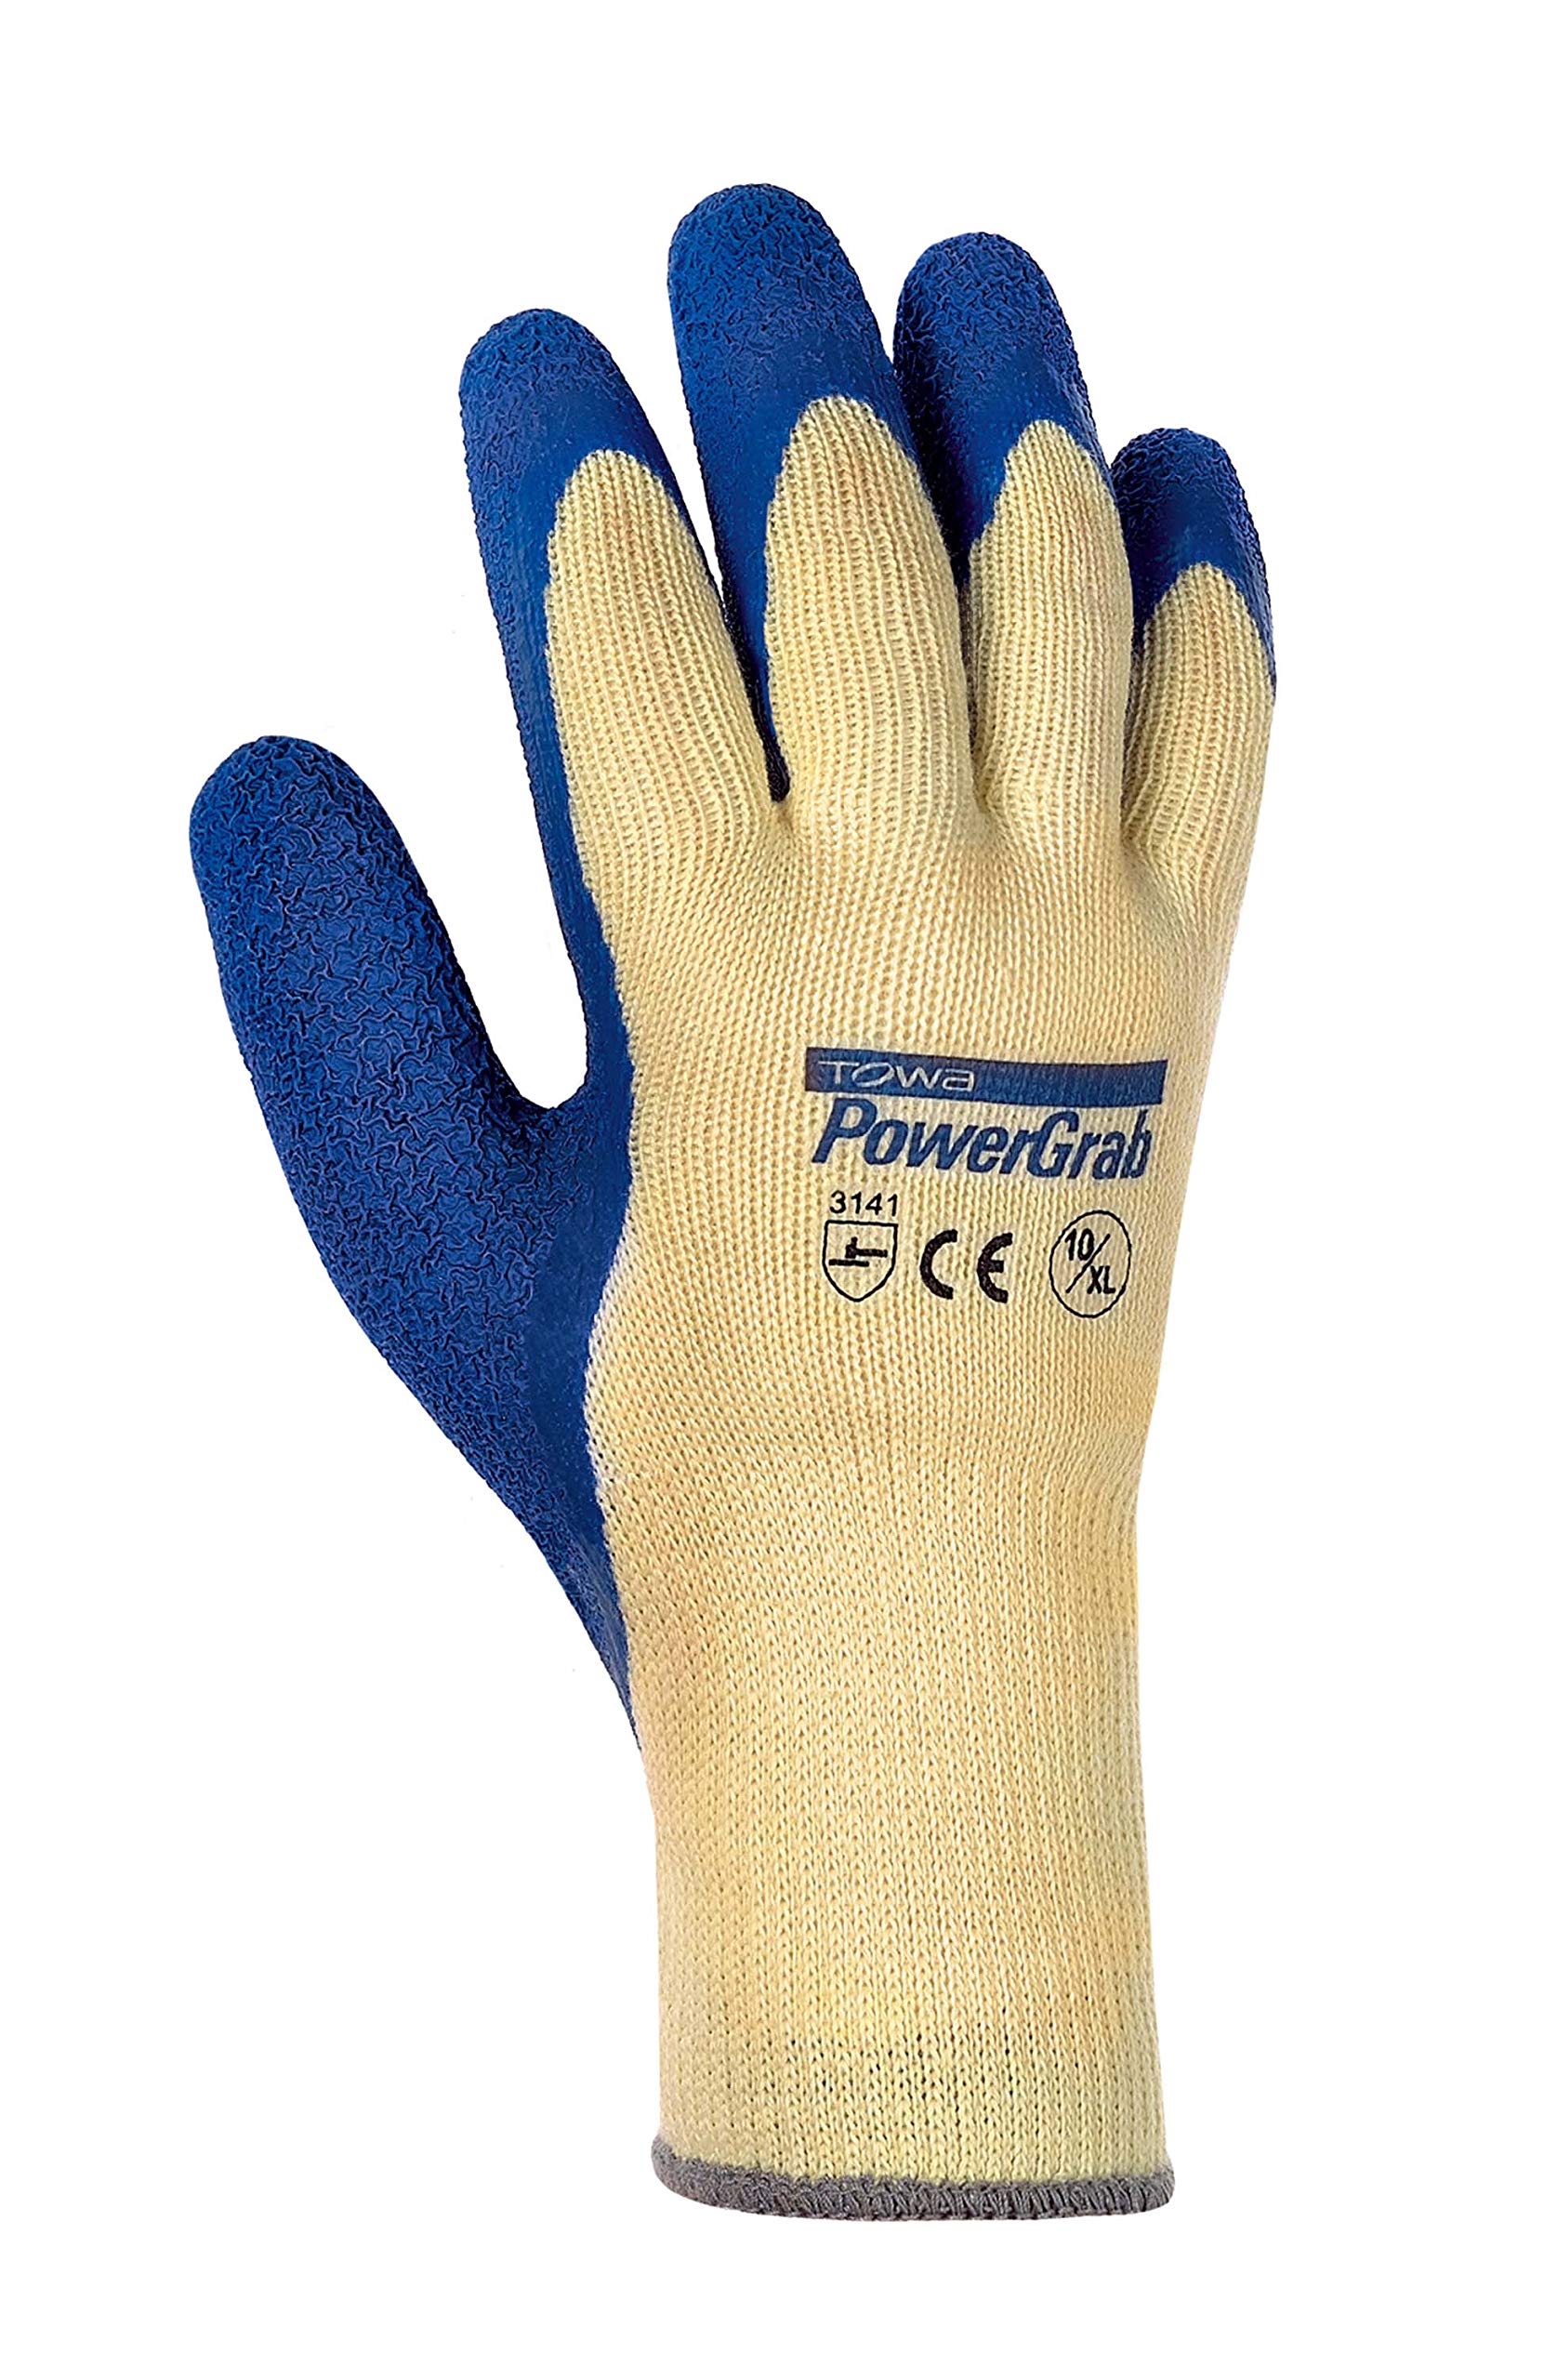 TOWA (72 Paar) Handschuhe Baumwoll-/Polyester-Strickhandschuhe PowerGrab 72 x natur/blau 7(S)